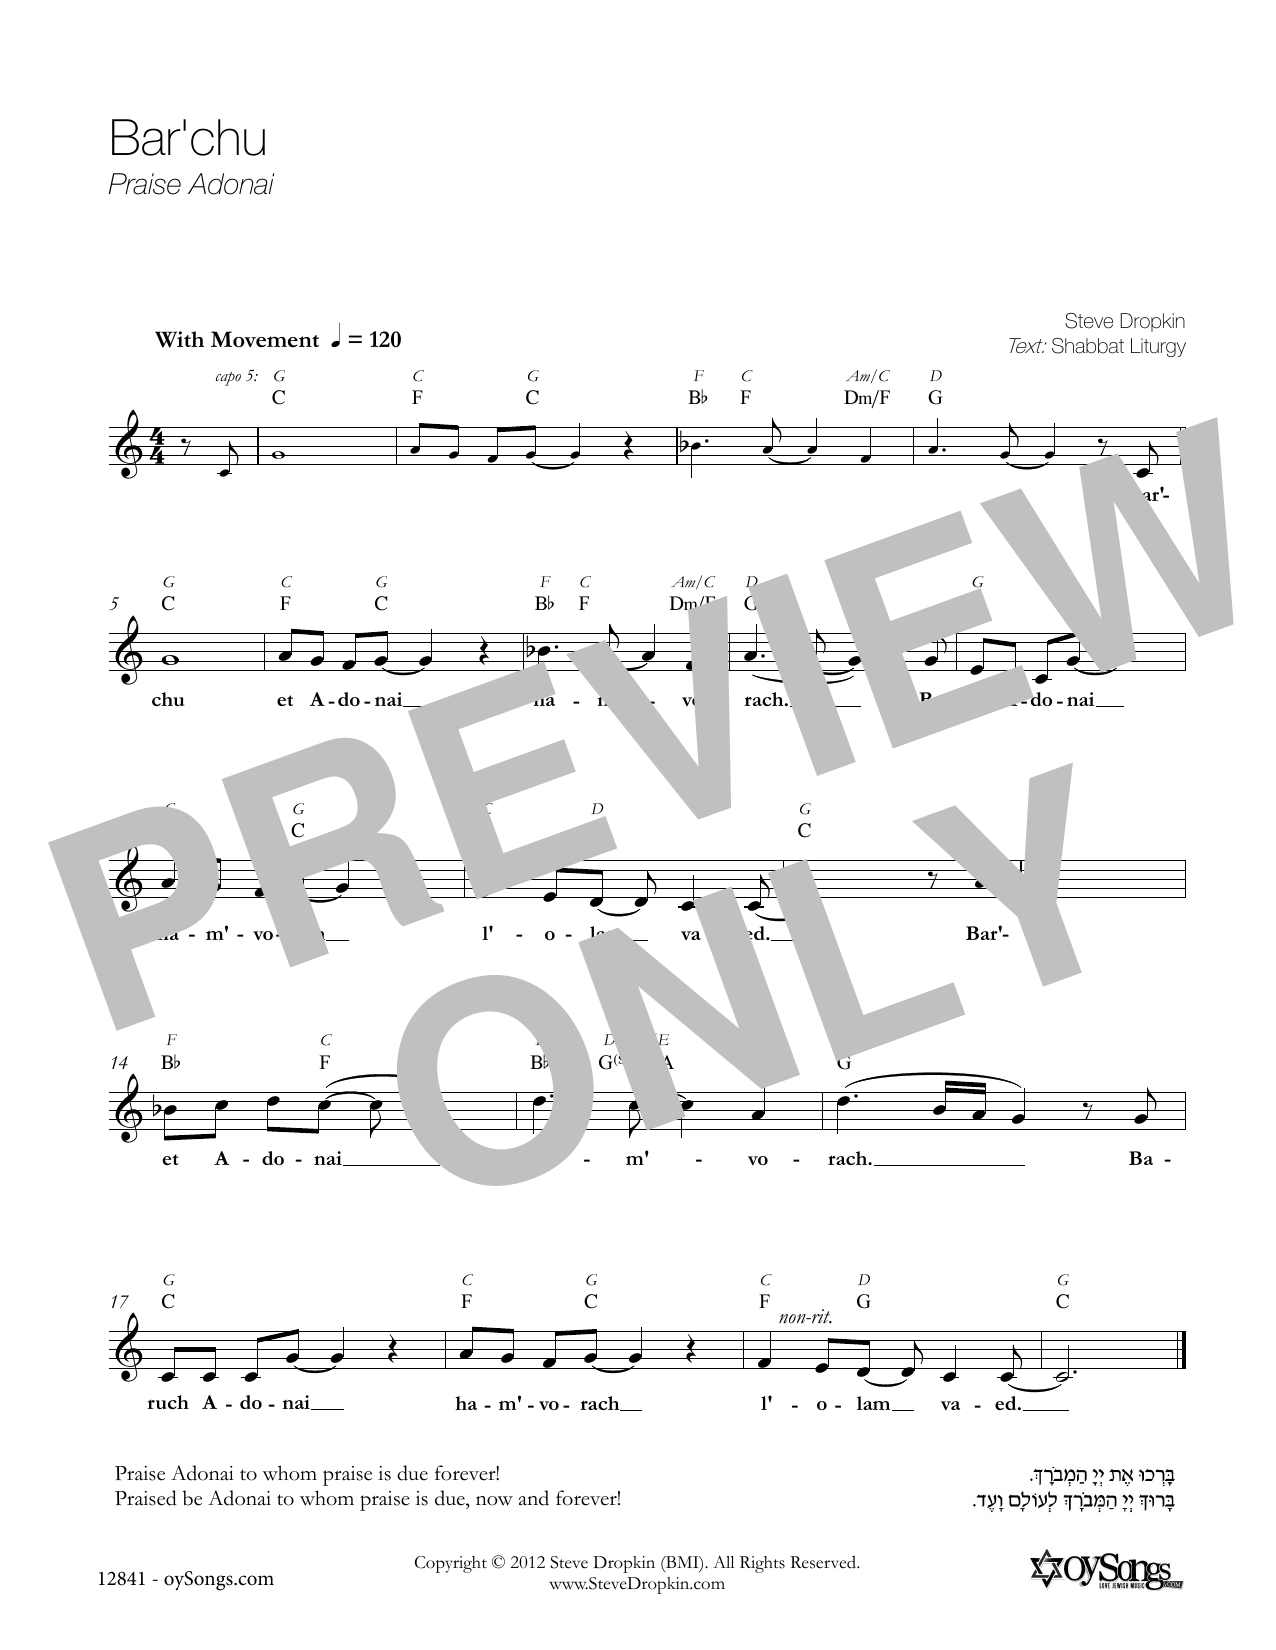 Steve Dropkin Bar'chu Sheet Music Notes & Chords for Melody Line, Lyrics & Chords - Download or Print PDF